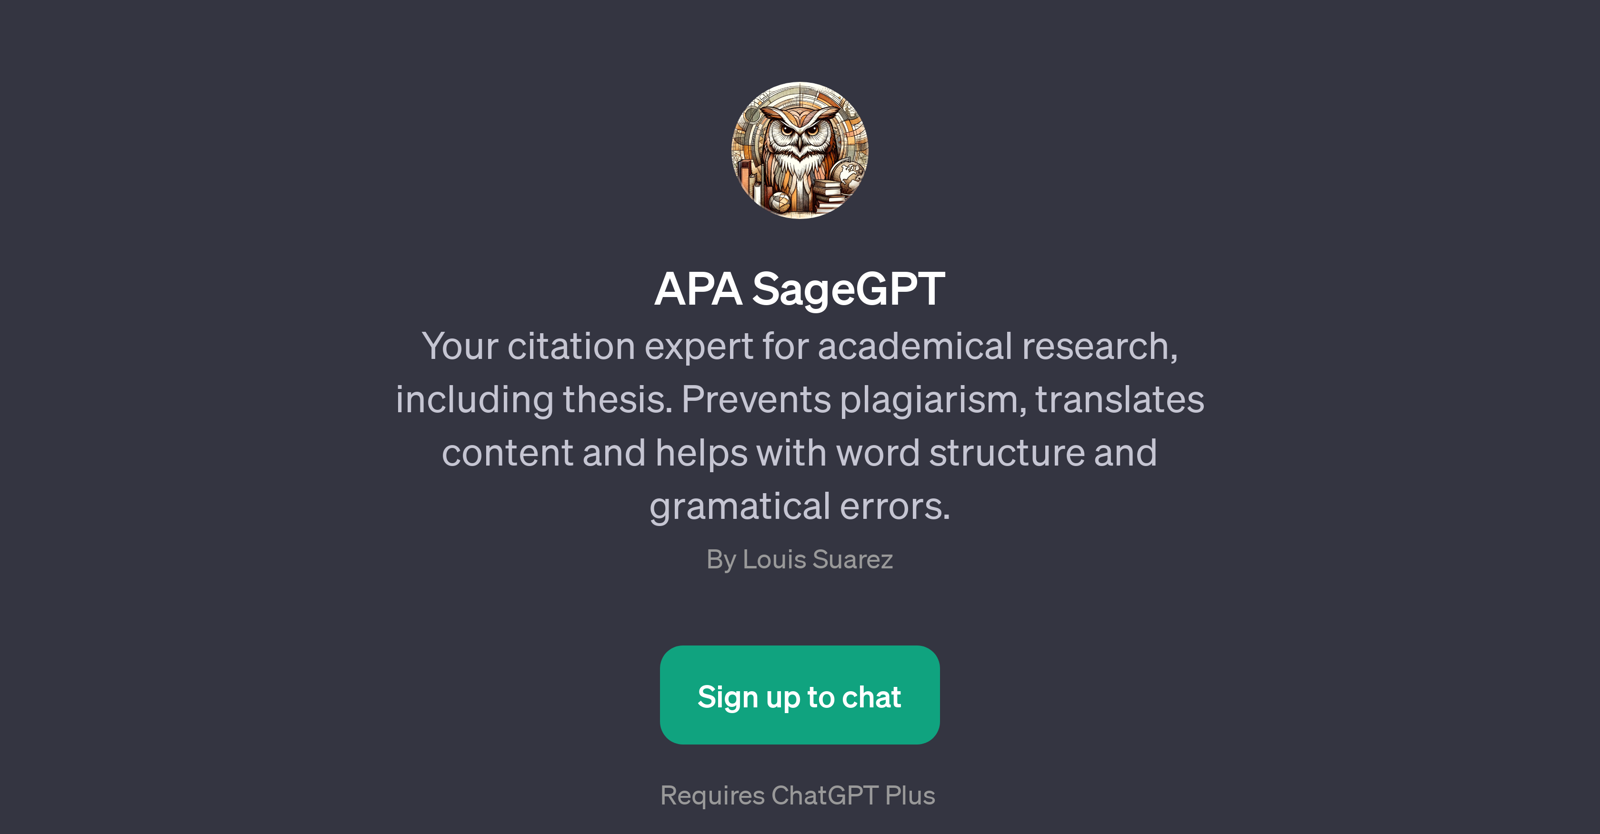 APA SageGPT website